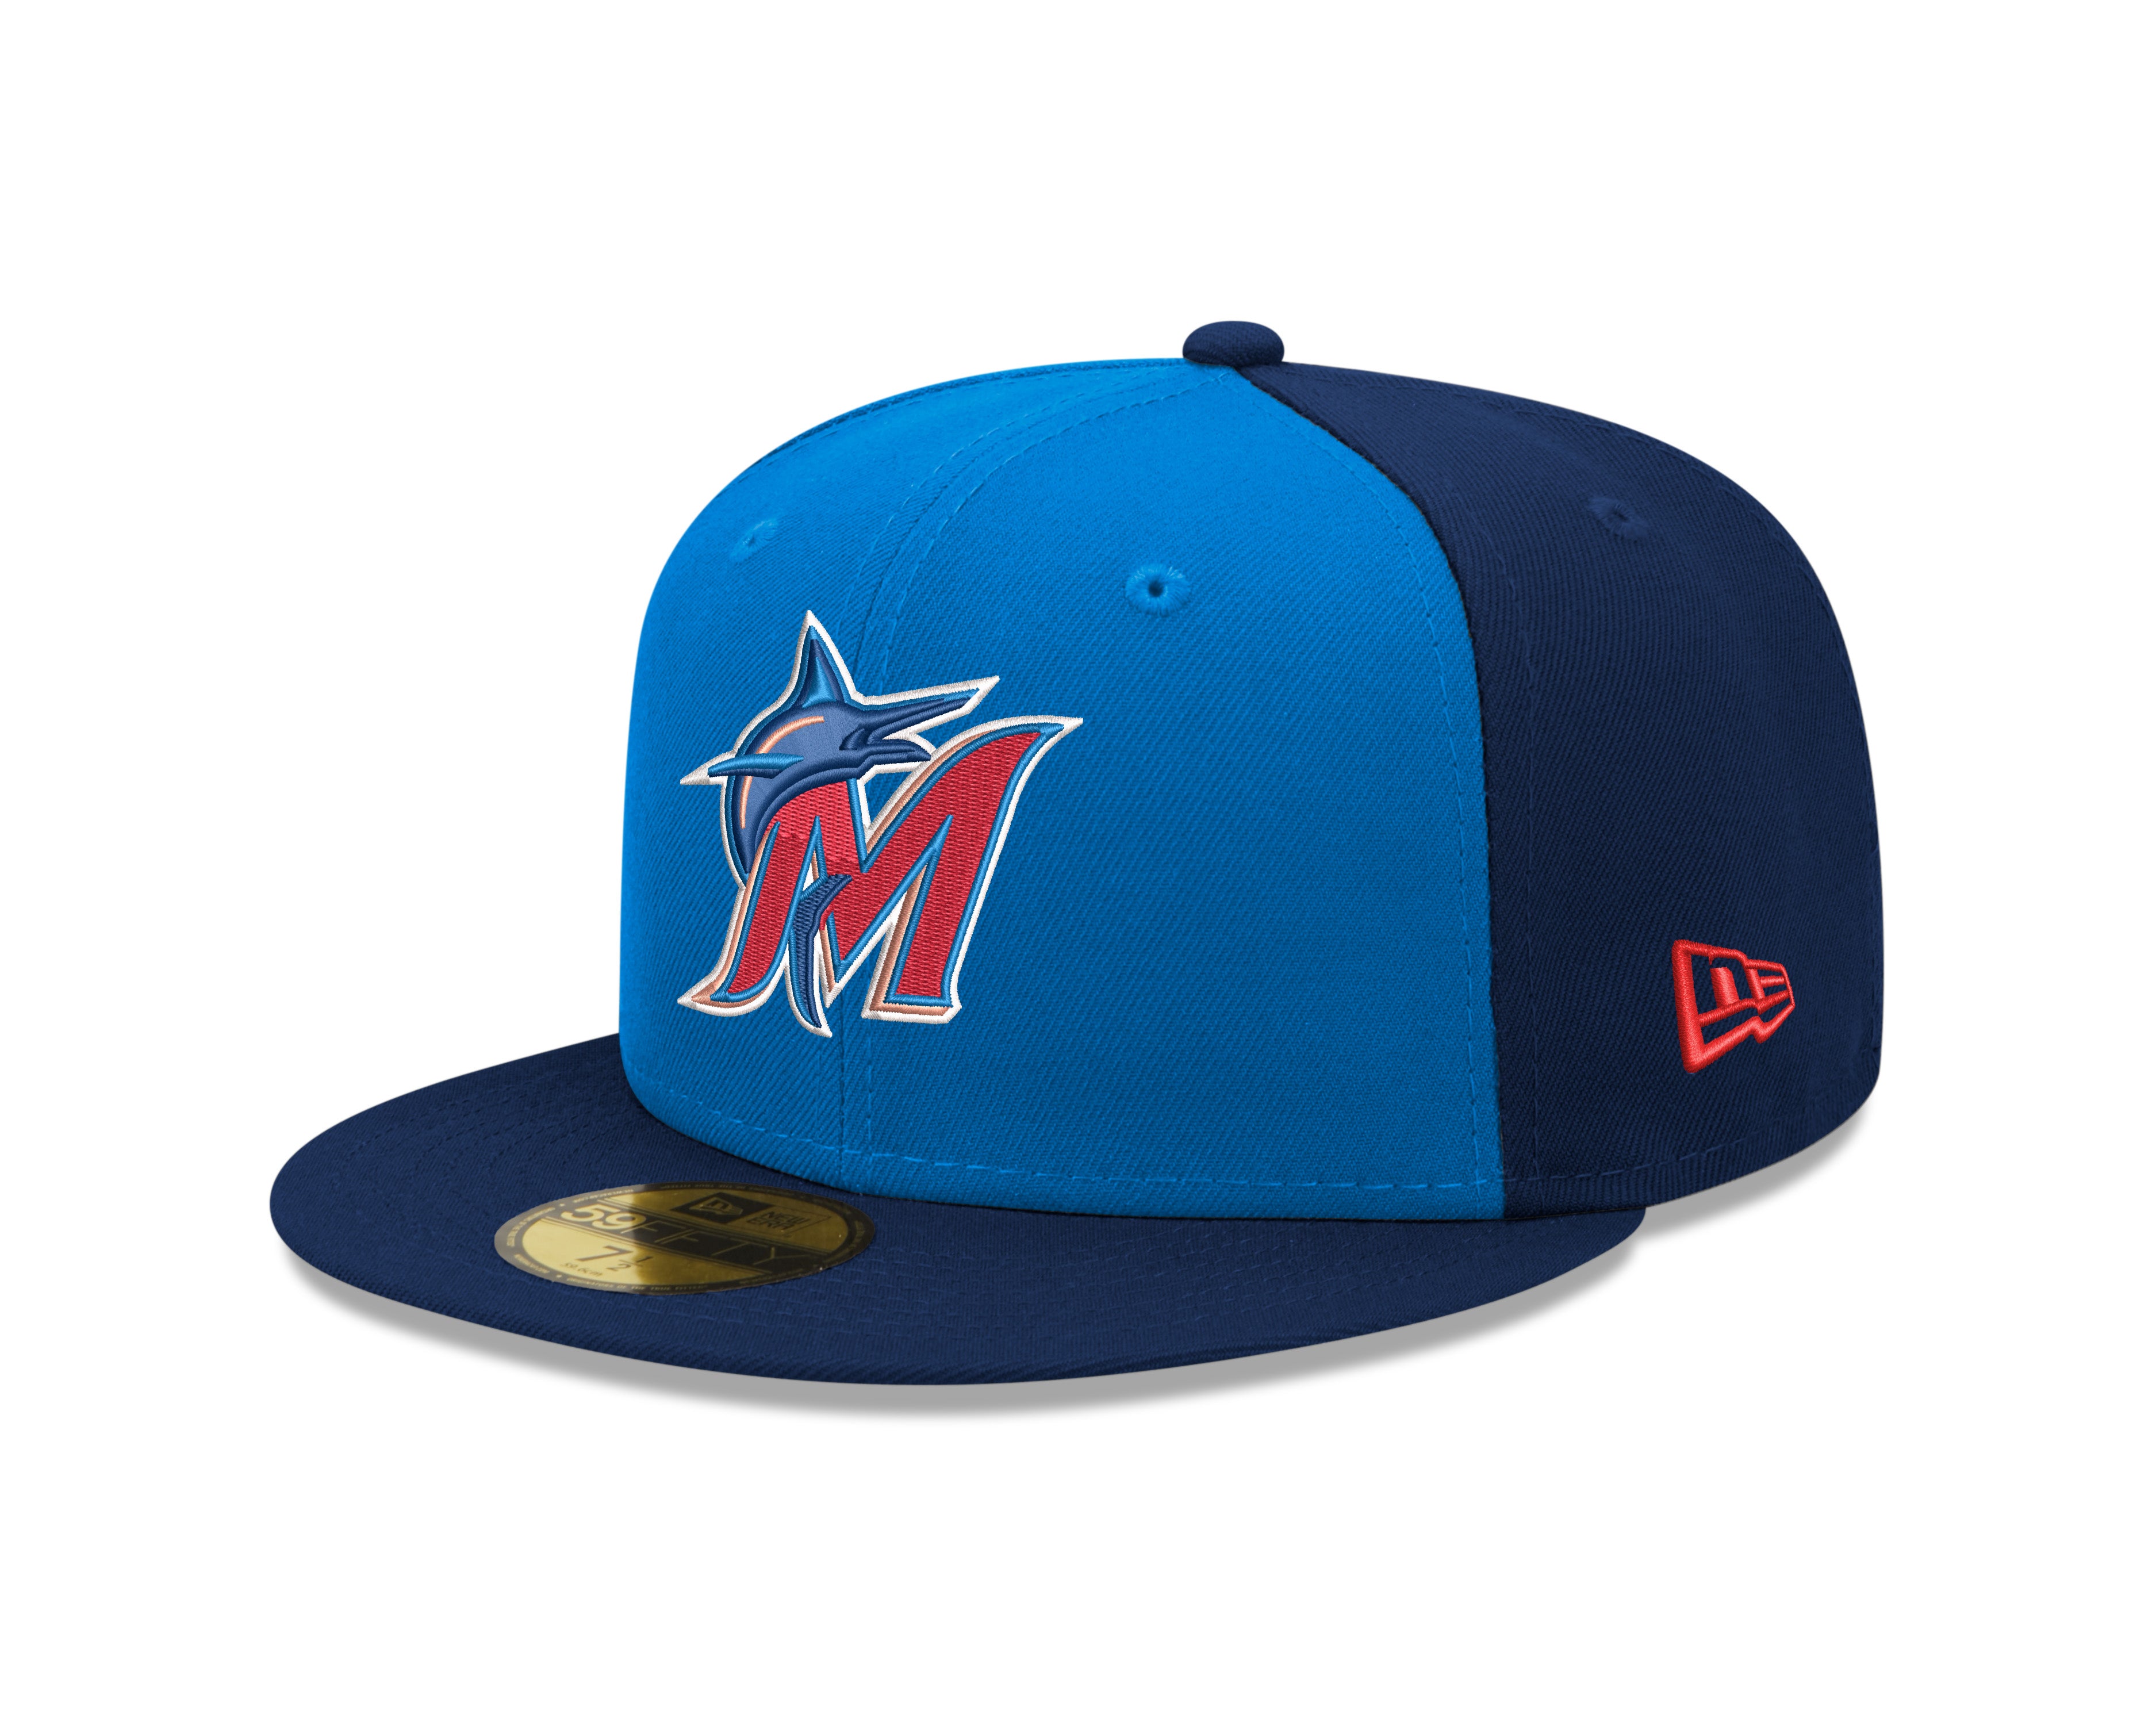 Miami Marlins MLB Stitch Baseball Jersey Shirt Design 5 Custom